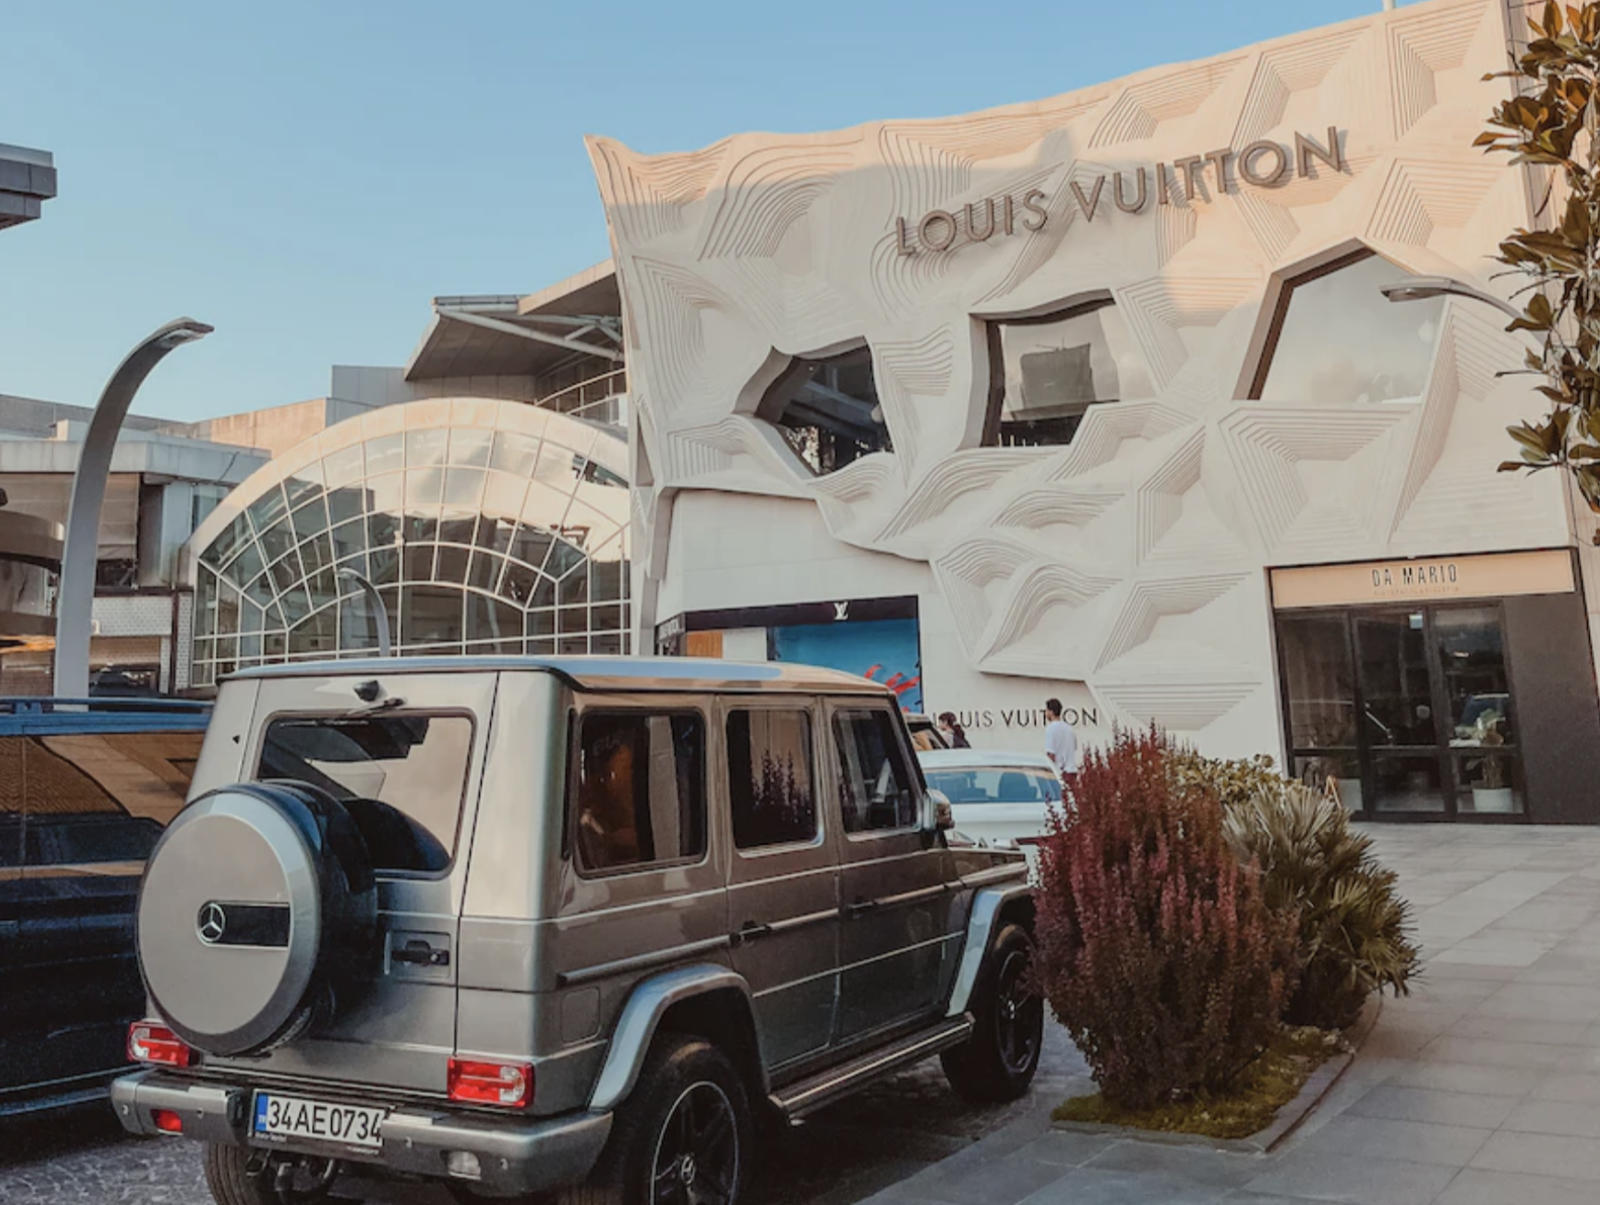 BREAKING NEWS: Louis Vuitton Loses Copyright Infringement Case